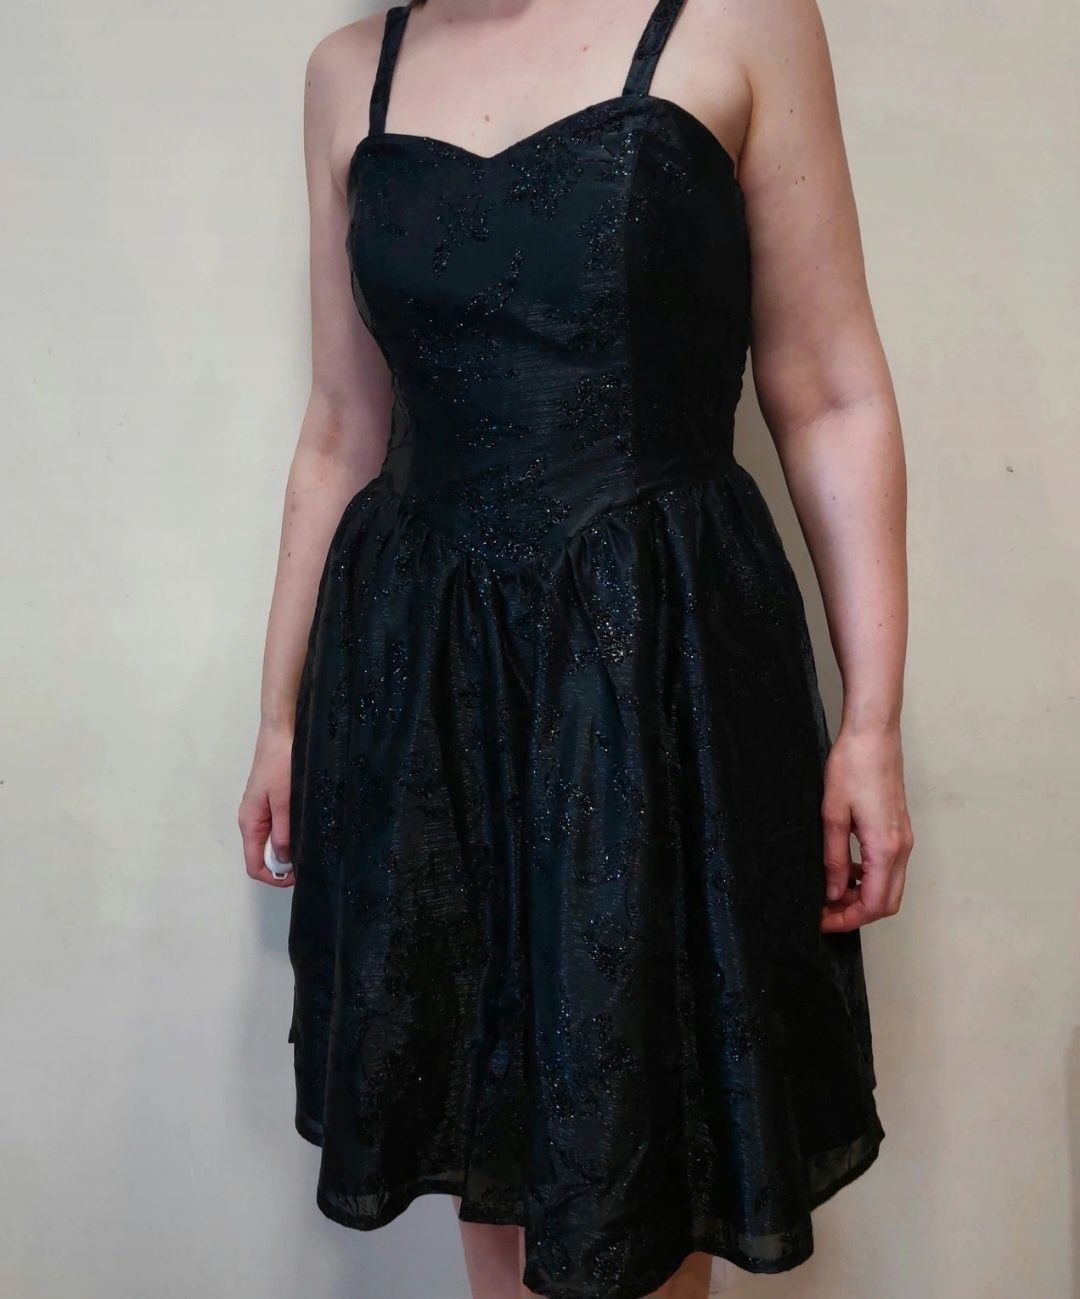 Czarna elegancka brokatowa sukienka C&A - 40

Bardzo ładna elegancka s